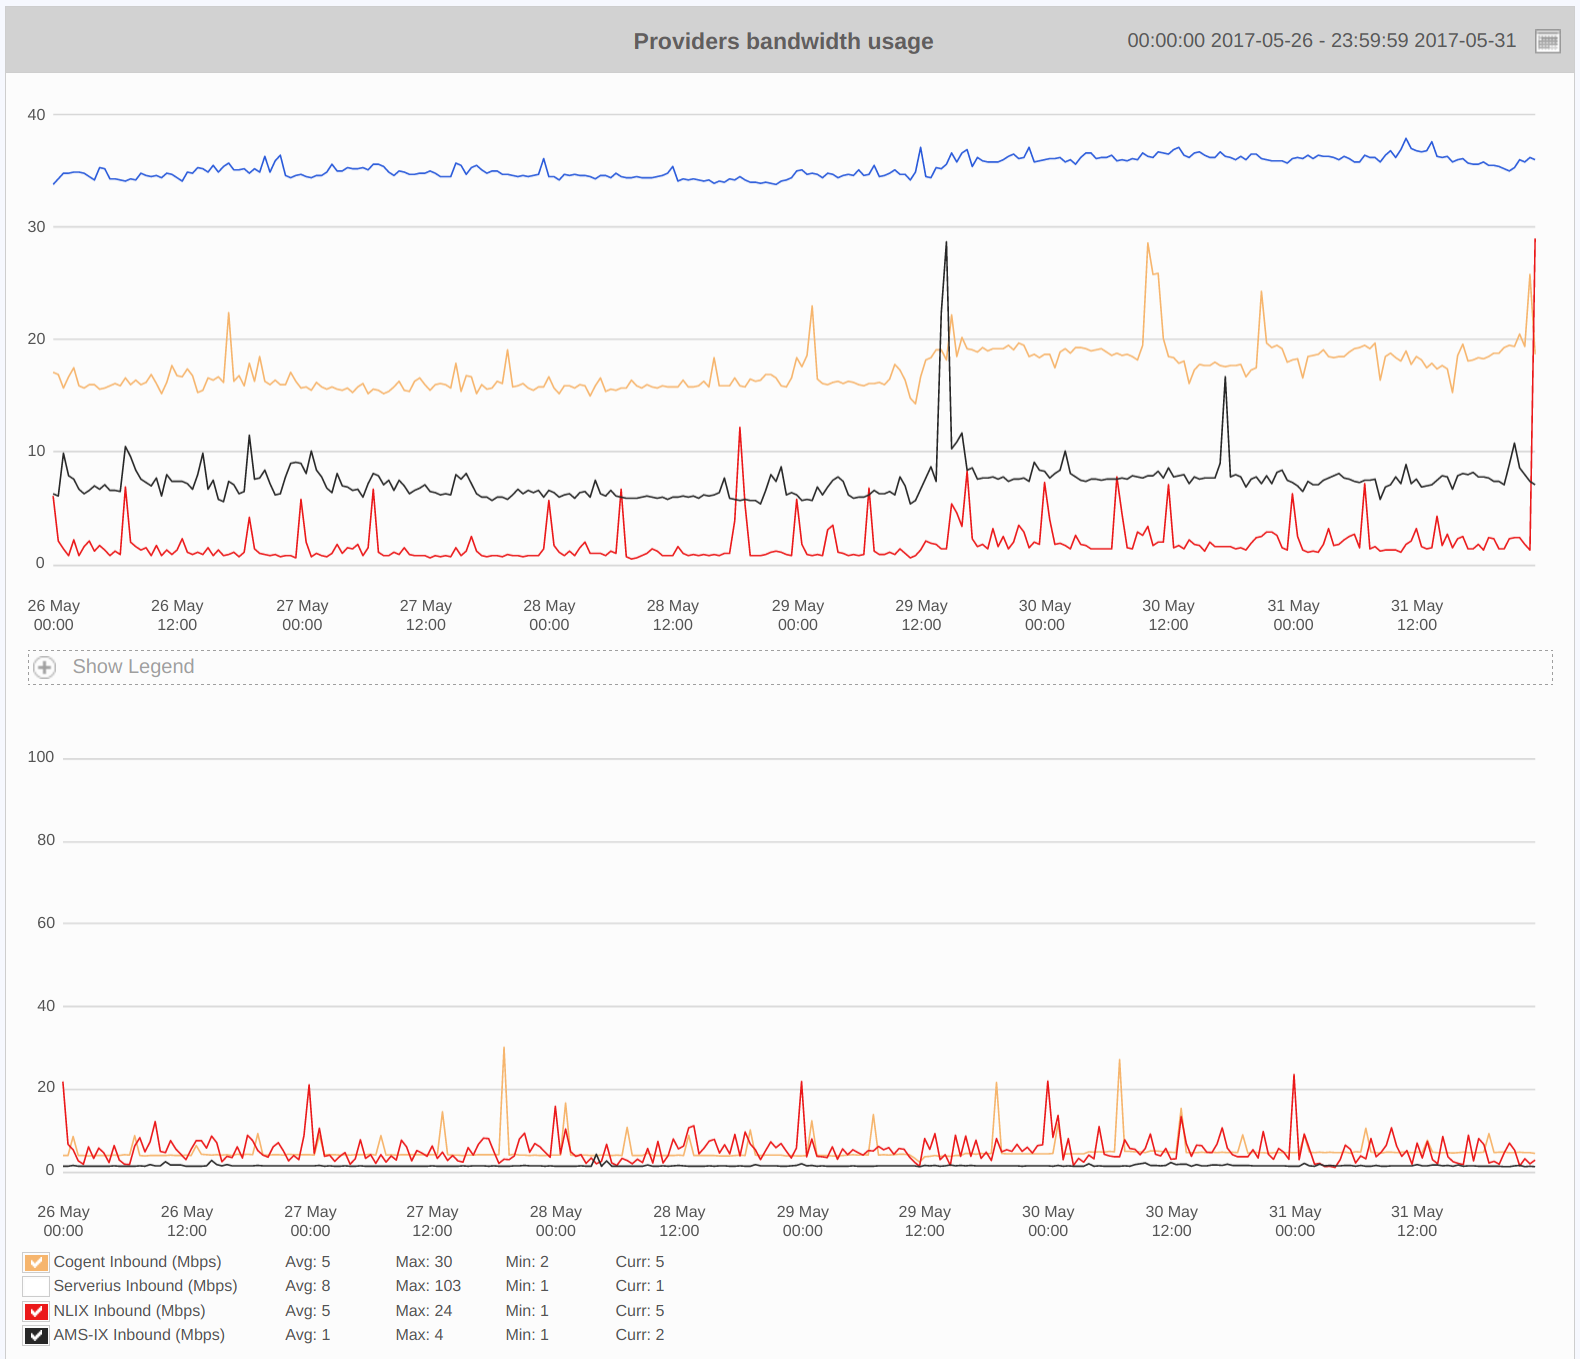 figure screenshots/graph-all-providers-bandwidth-usage.png